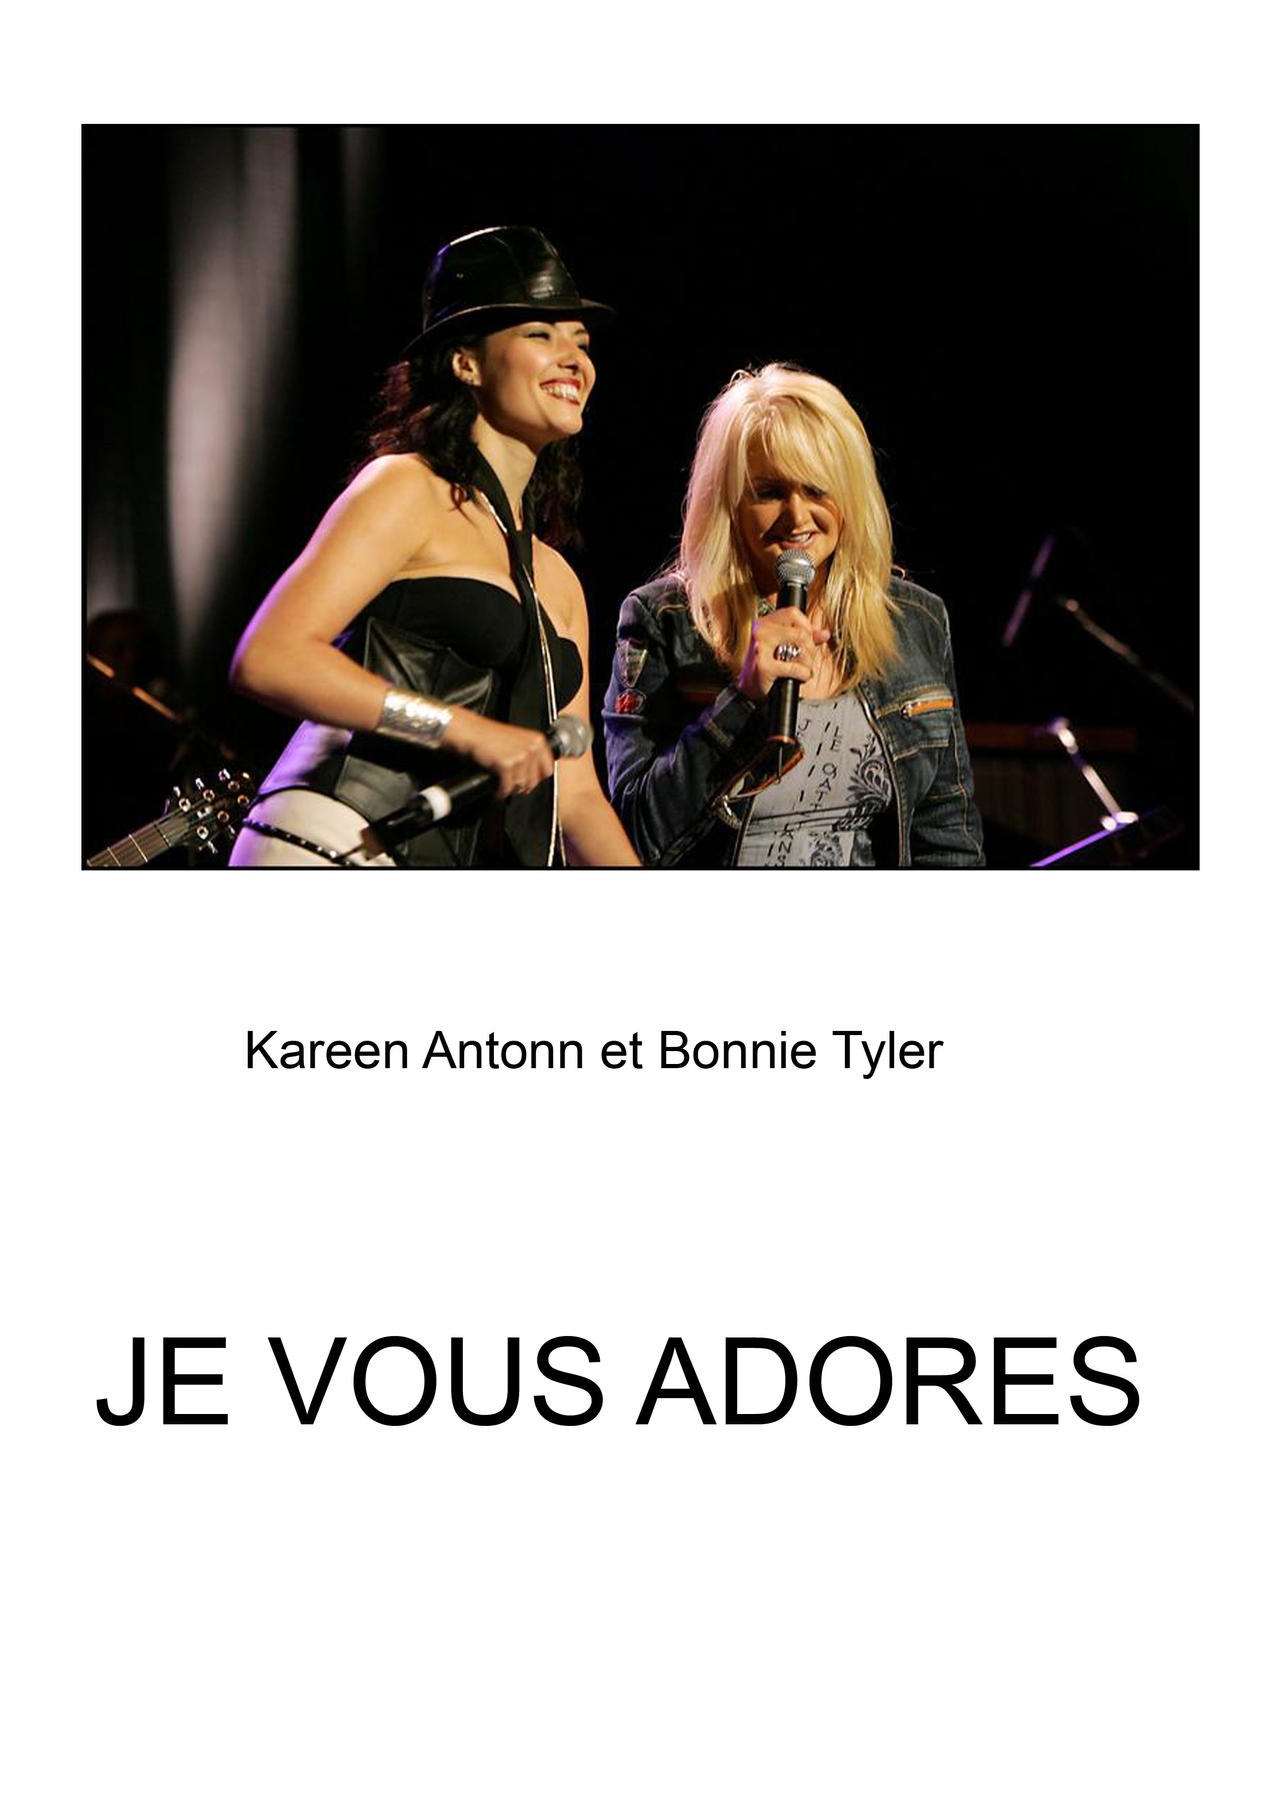 Kareen Antonn et Bonnie Tyler copy by Khing01 on DeviantArt